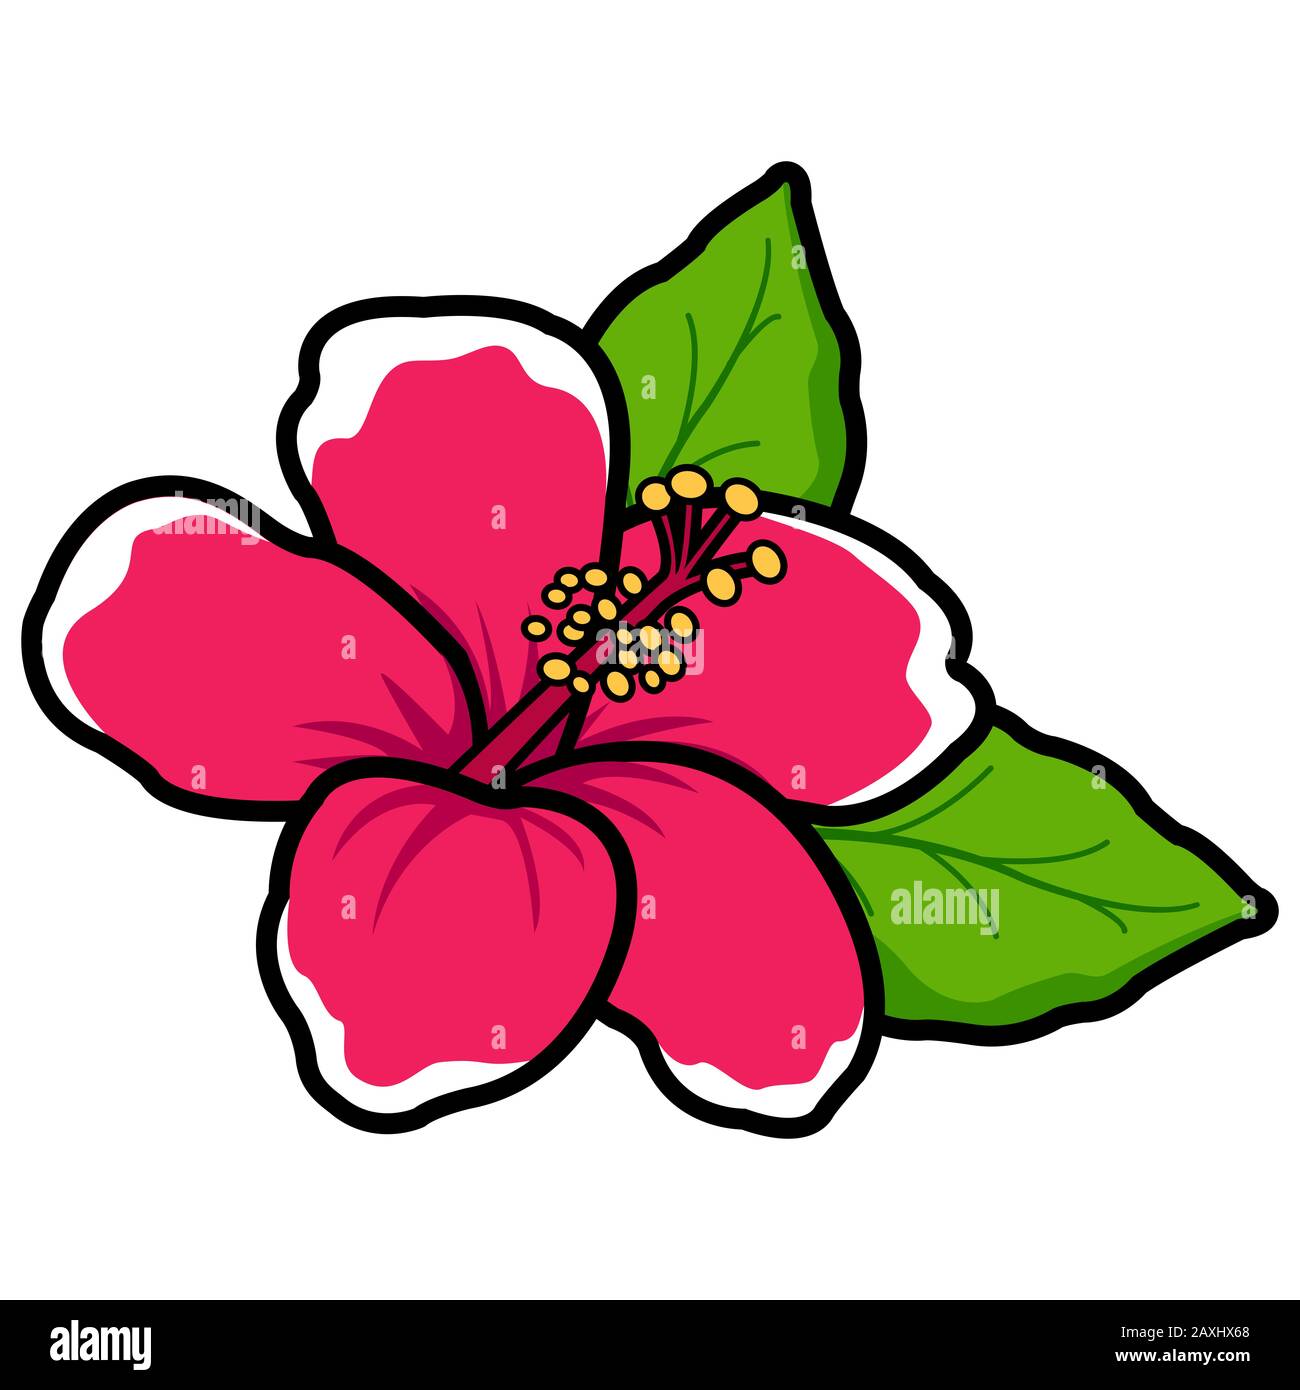 Illustration of a cartoon style Hawaiian hibiscus flower Stock Photo - Alamy